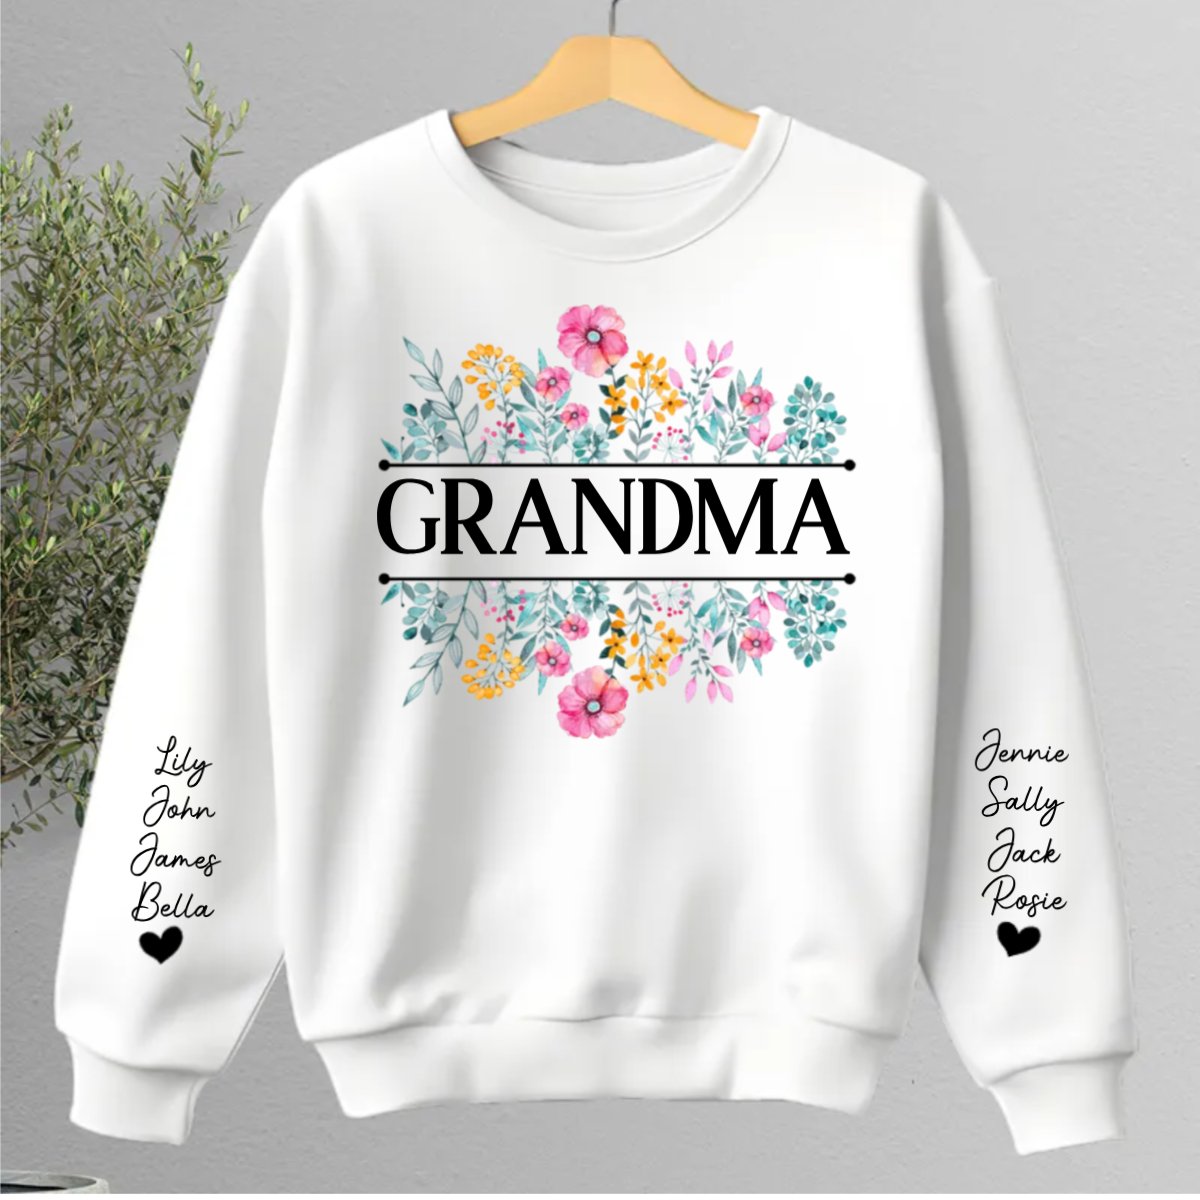 Family - In Grandma's Garden, Love Grows Like Flowers - Personalized Sweatshirt - The Next Custom Gift